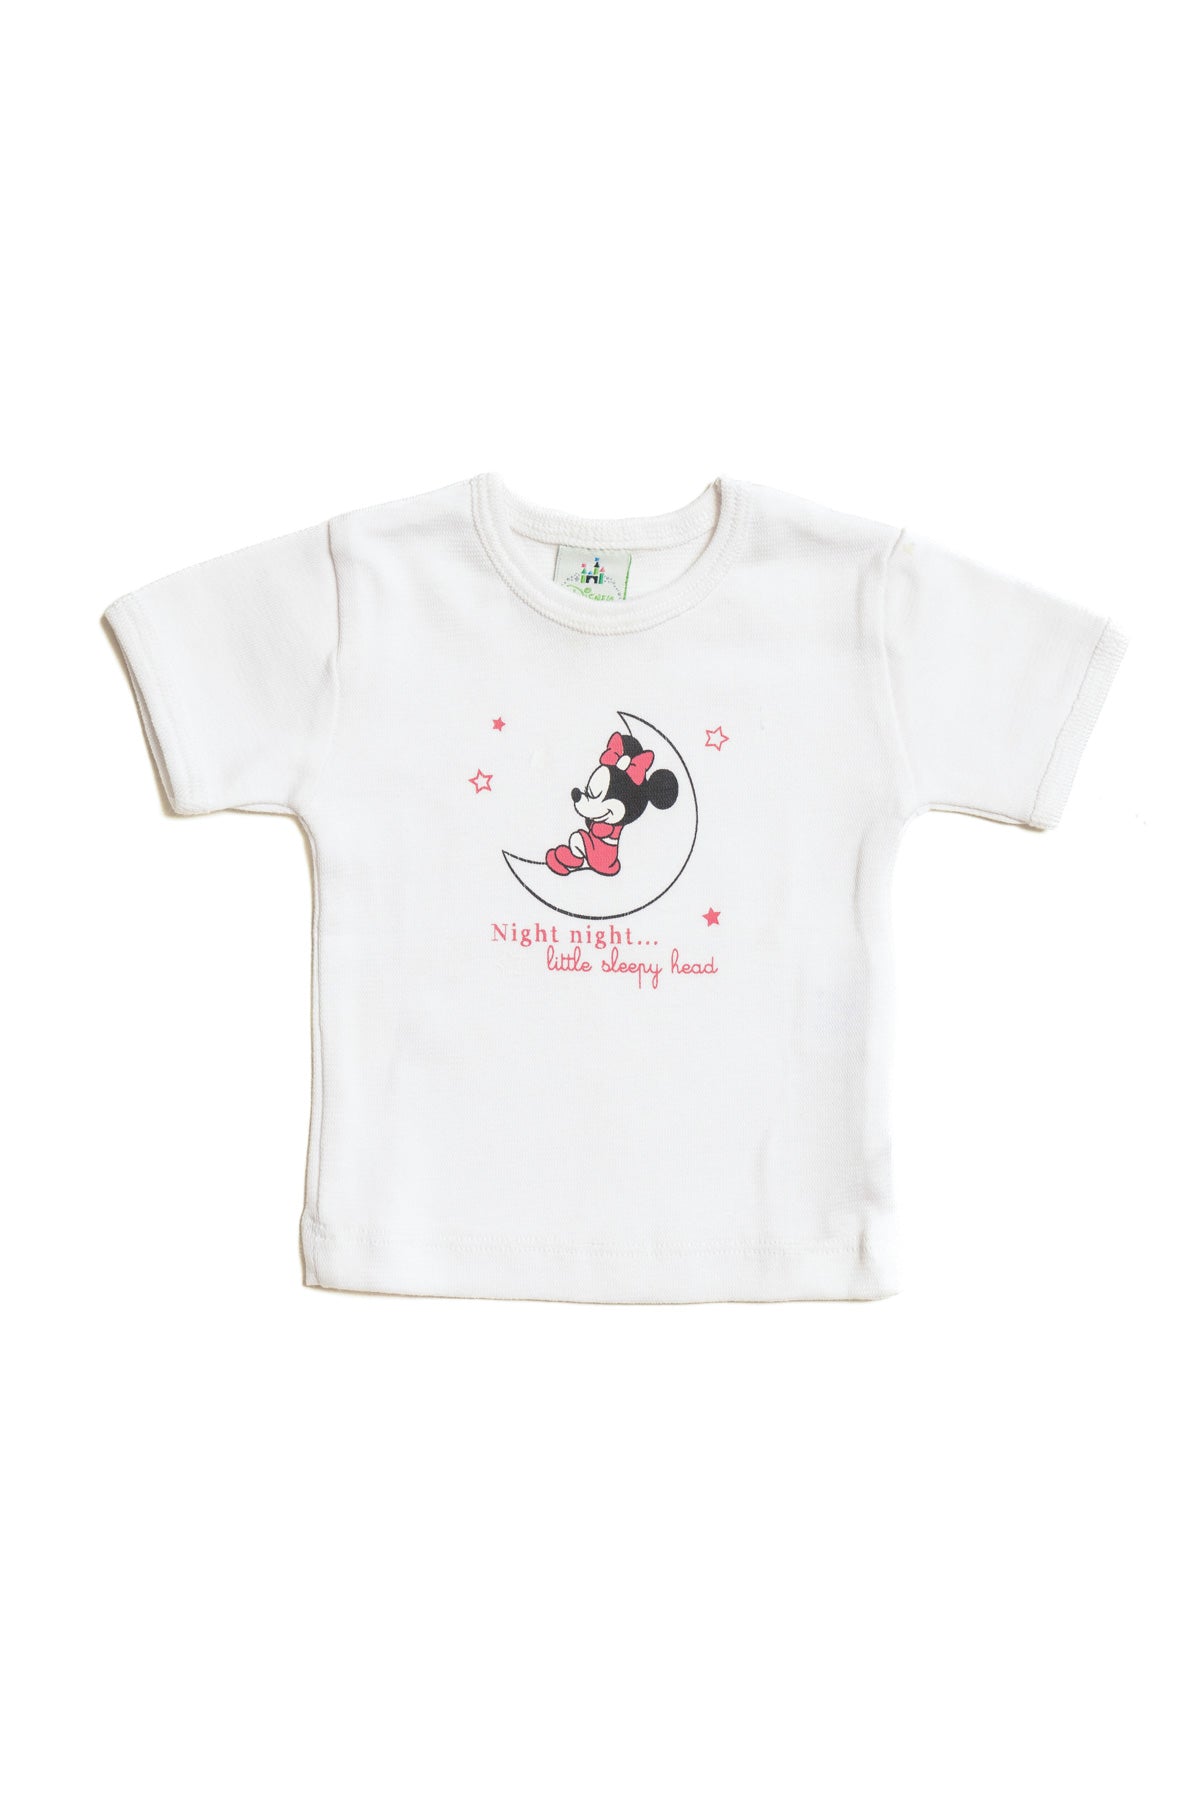 T-Shirt Baby Minnie " Little Sleepy" Half sleeve 4005